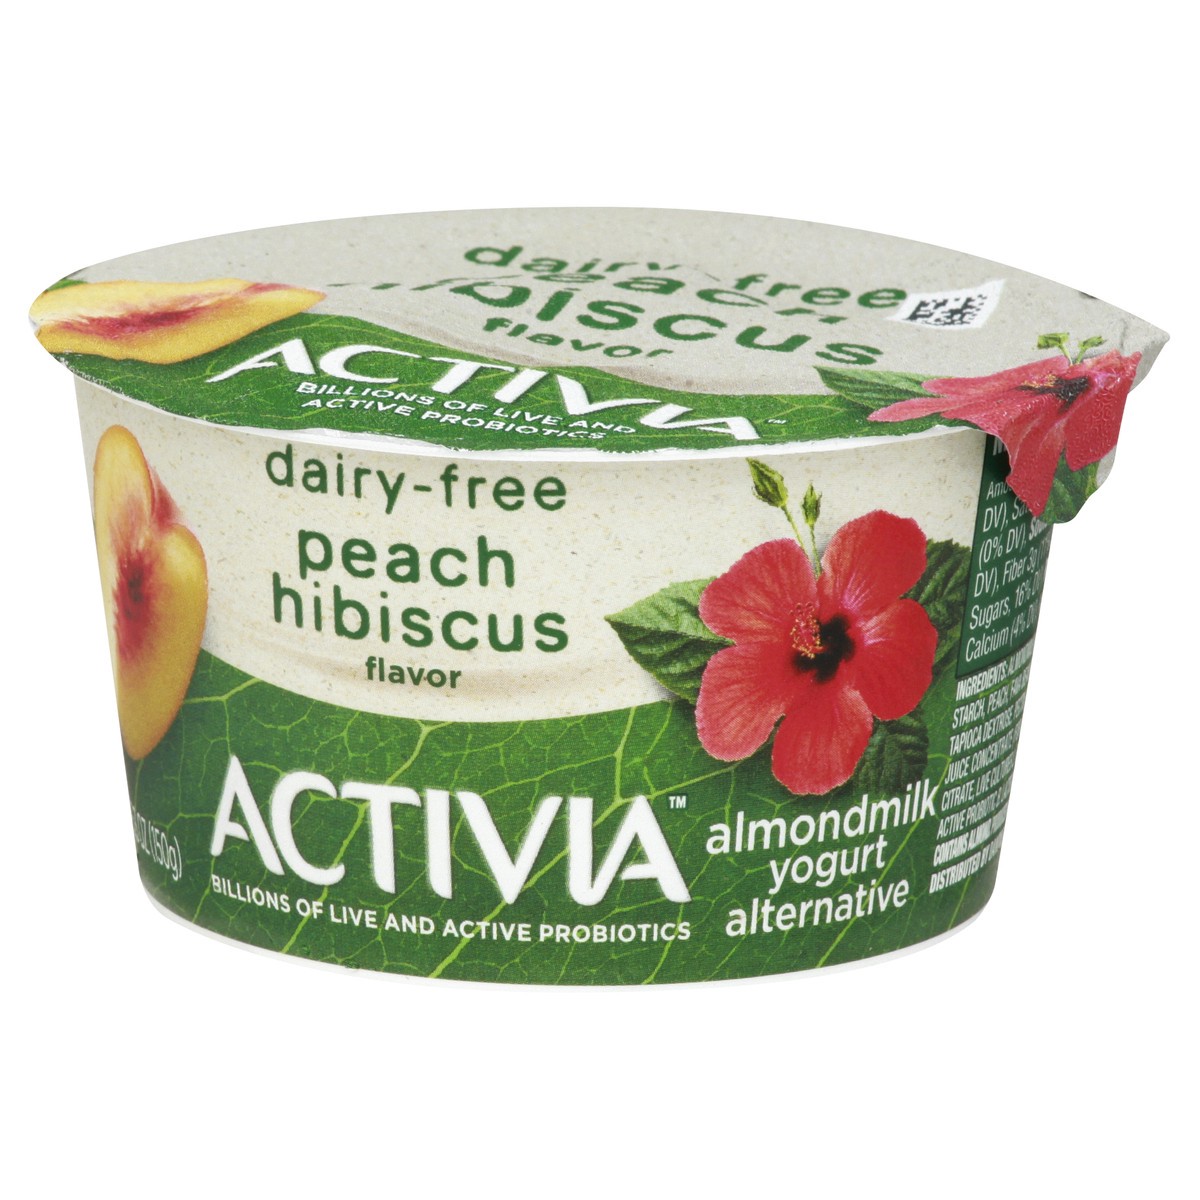 slide 7 of 10, Activia Almond Milk Dairy-Free Yogurt Alternative, Peach Hibiscus, 5.3 oz., 5.3 oz